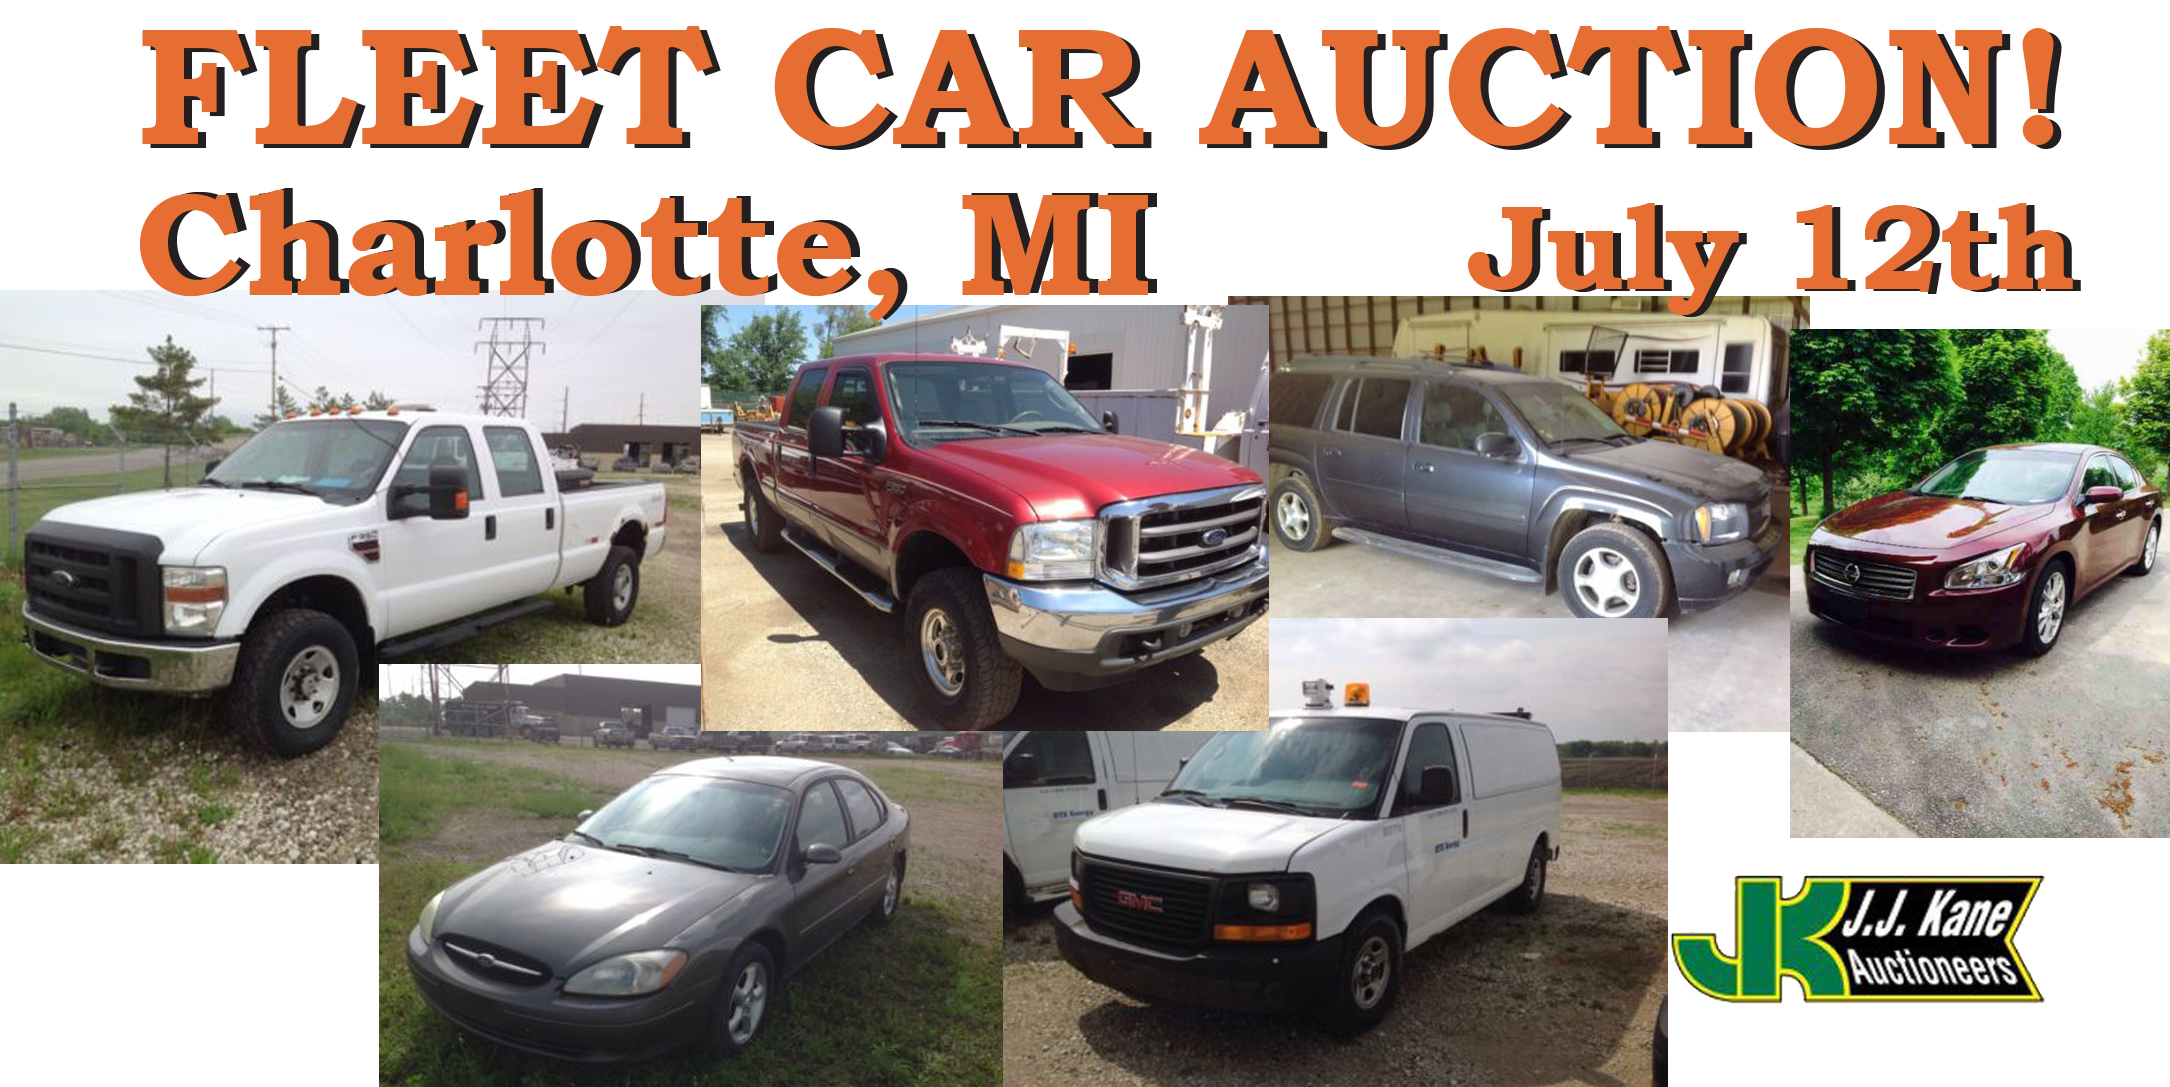 lansing-mi-public-auction-saturday-july-12th-2014-selling-fleet